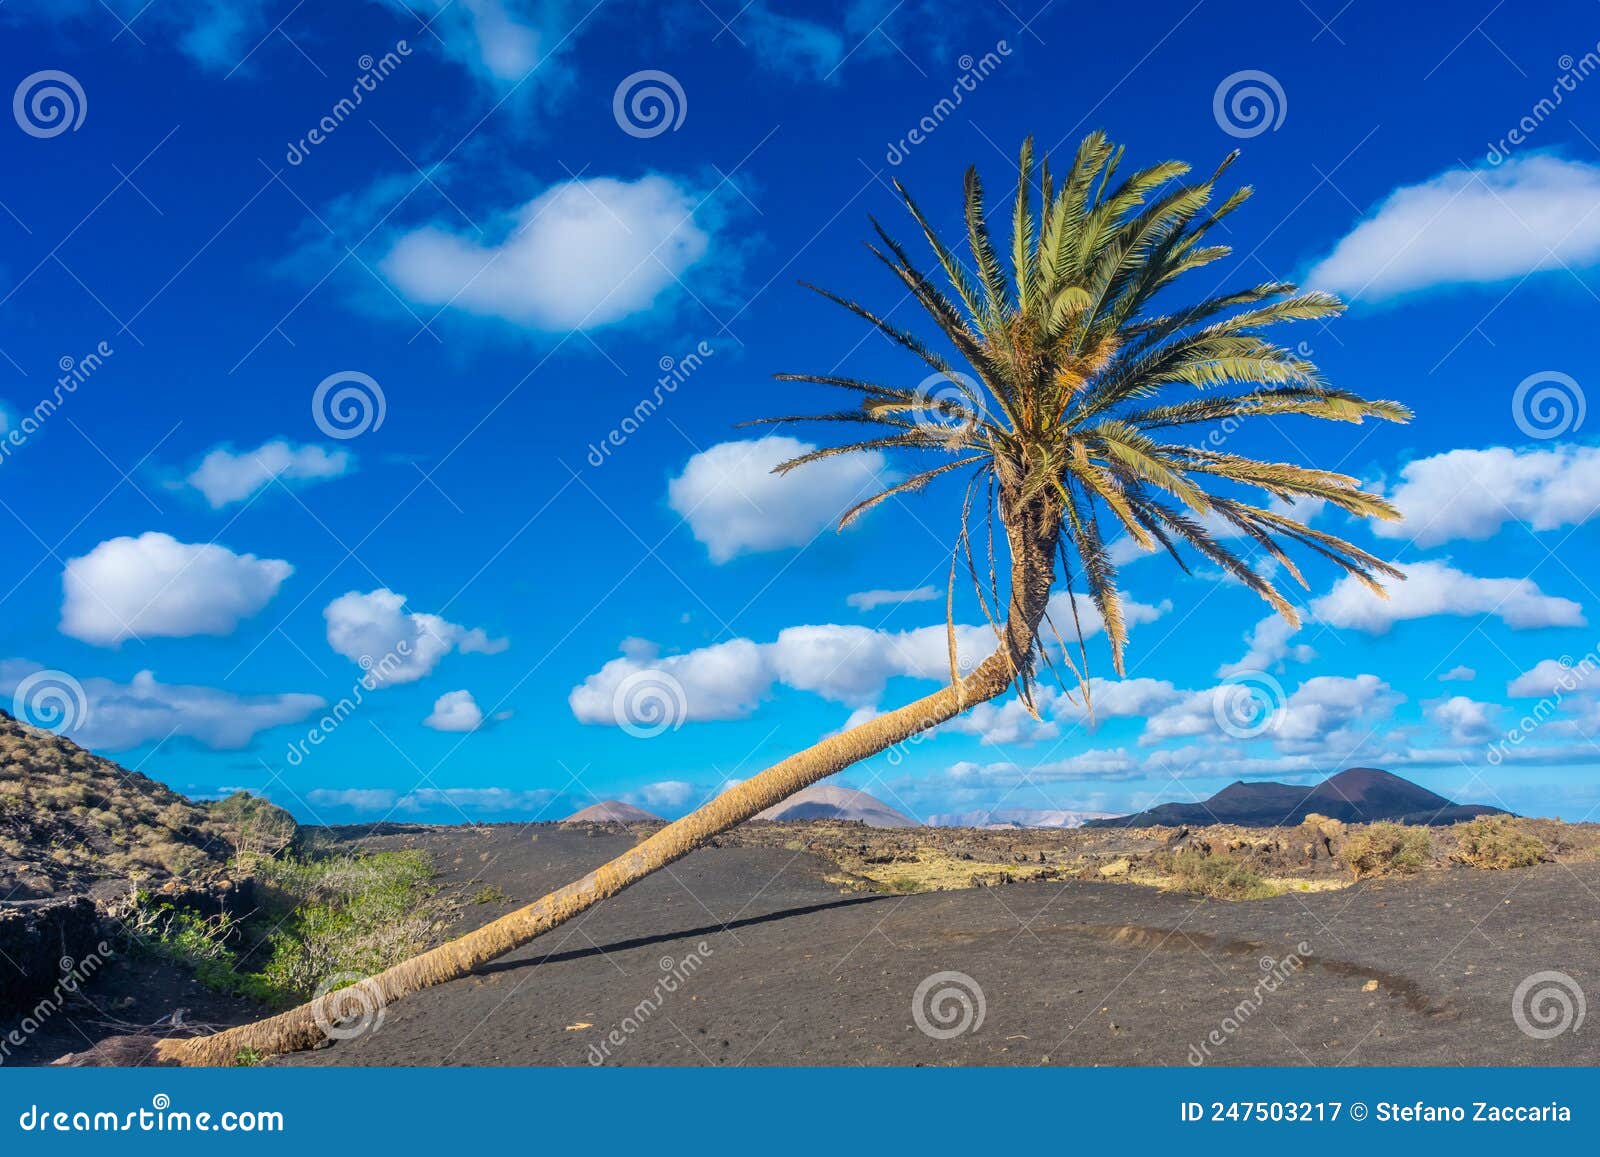 the `palmera inclinada` translation: inclined palm of lanzarote, canary islands,